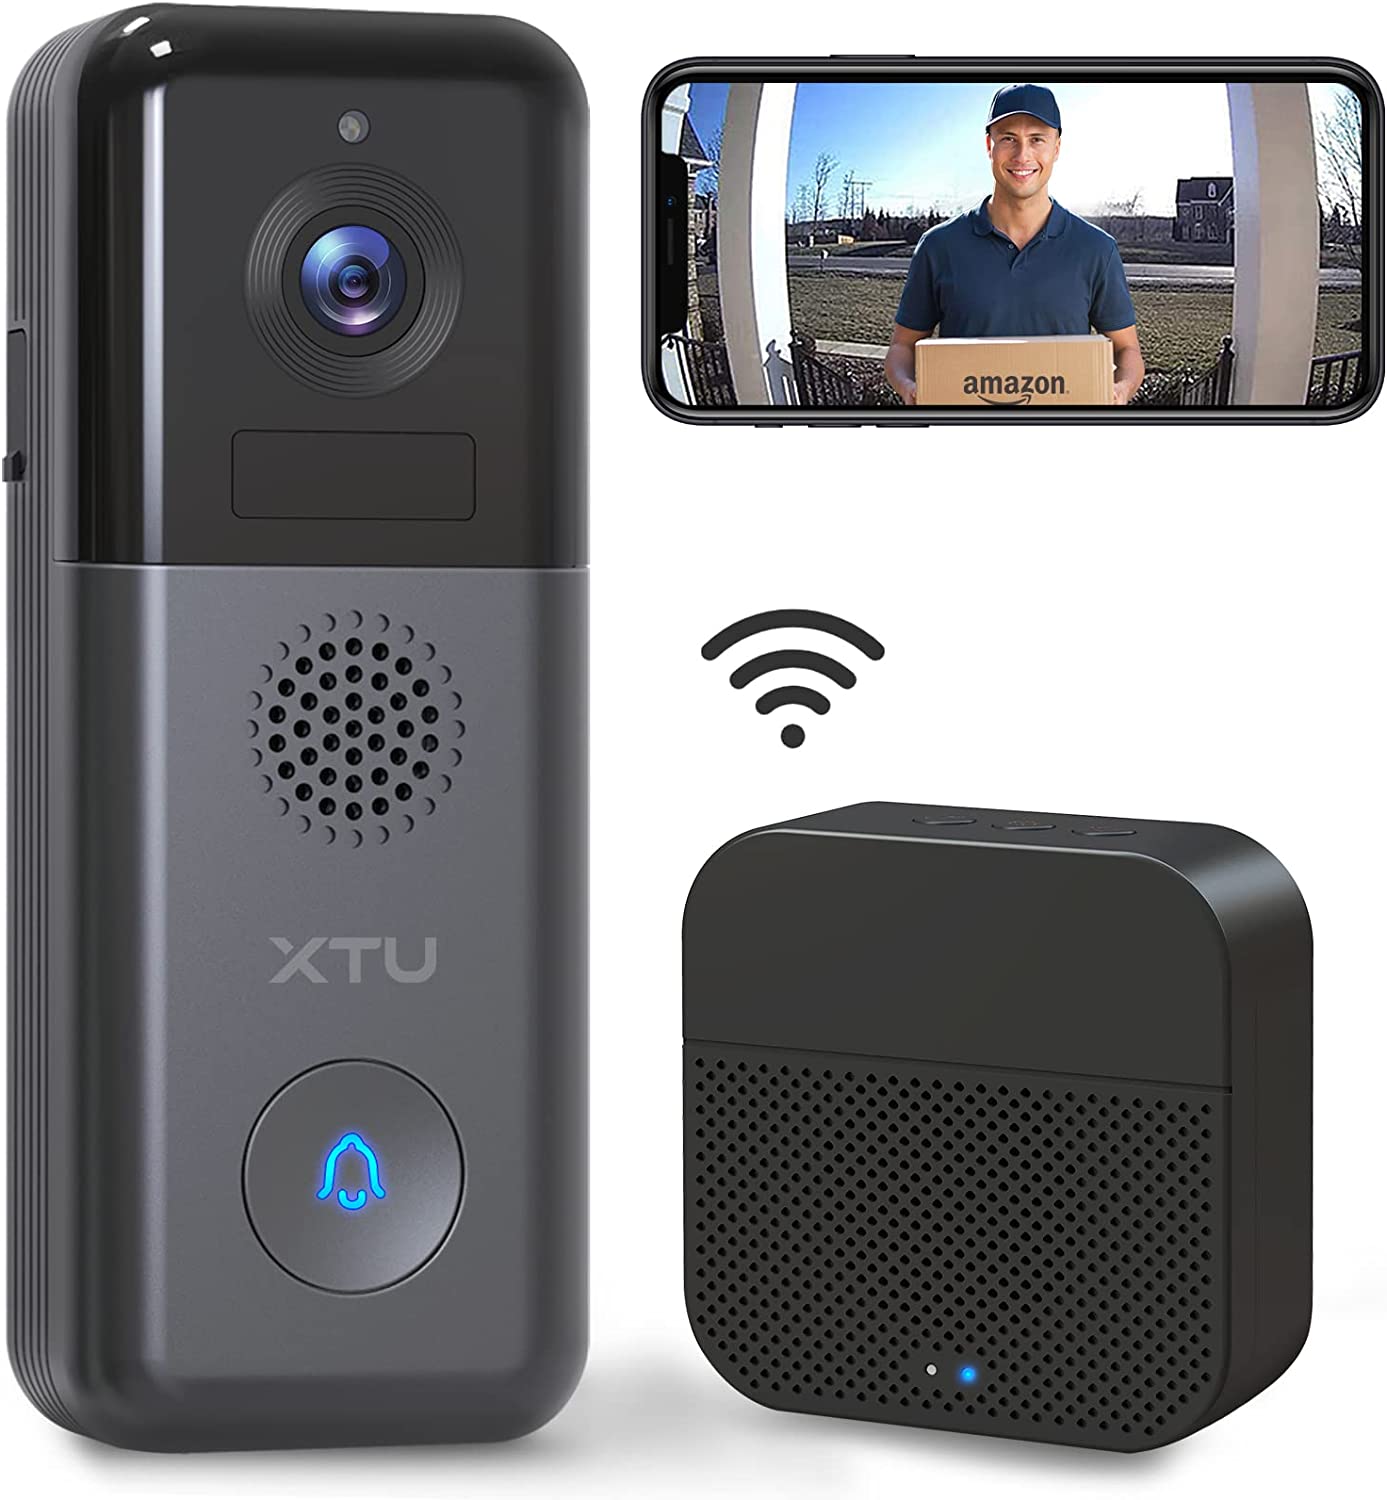 XTU Wireless WiFi Video Doorbell Camera